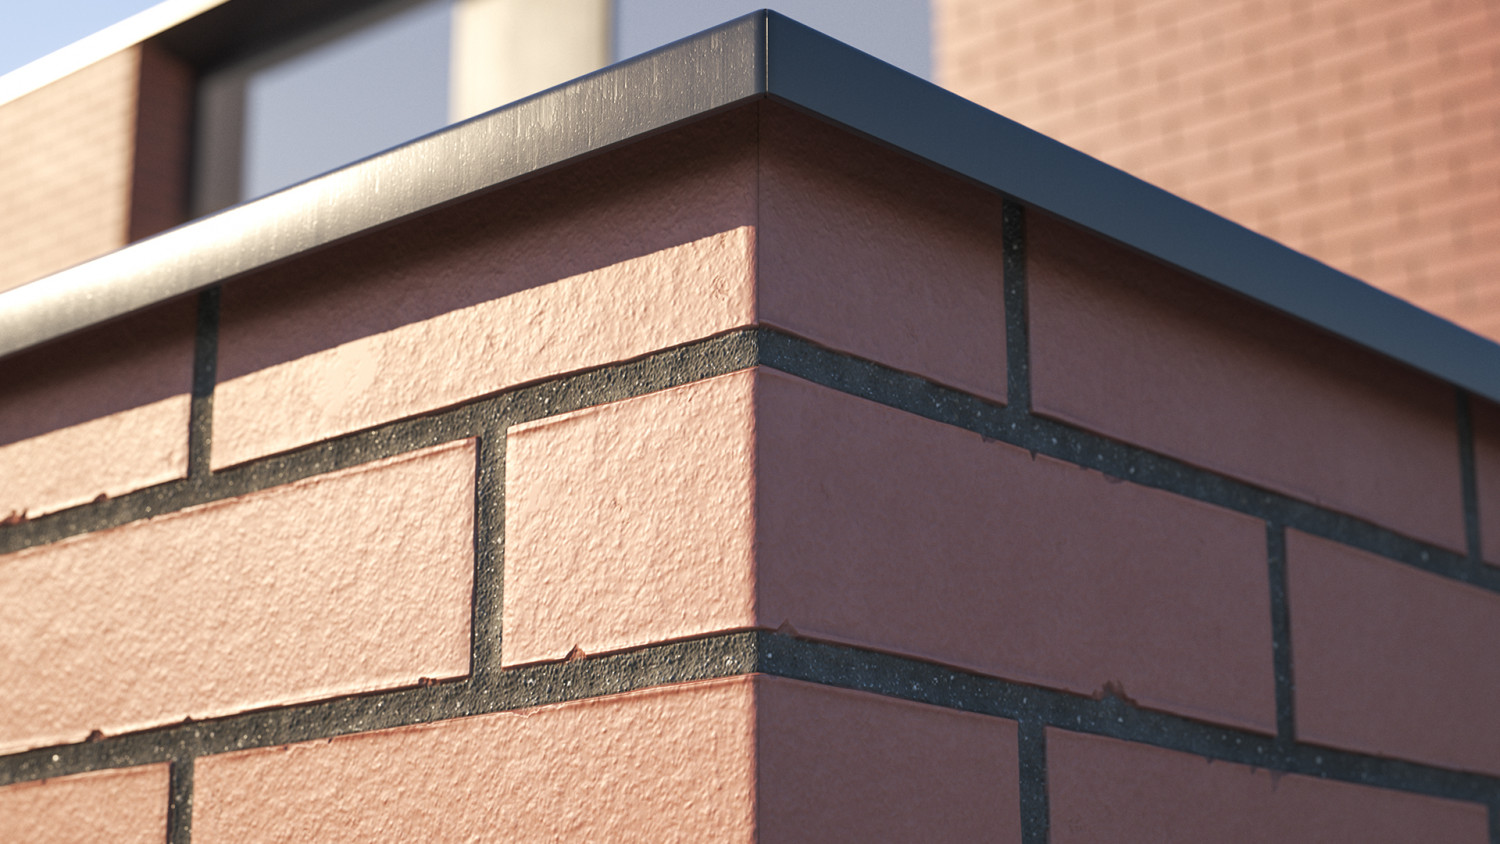 Clean clinker brick texture